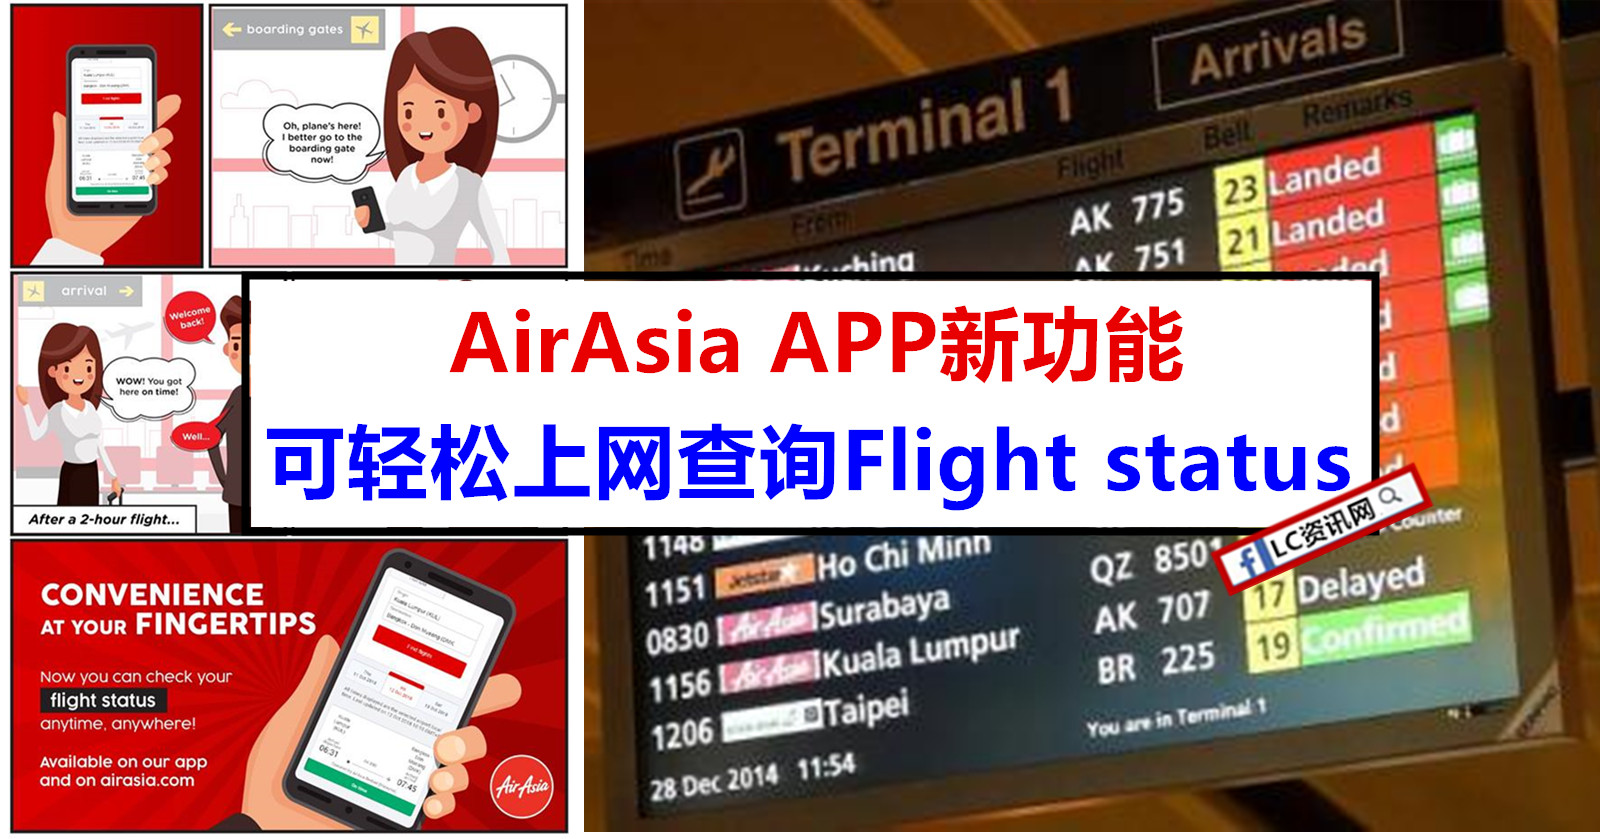 可以轻松通过AirAsia APP查询Flight status